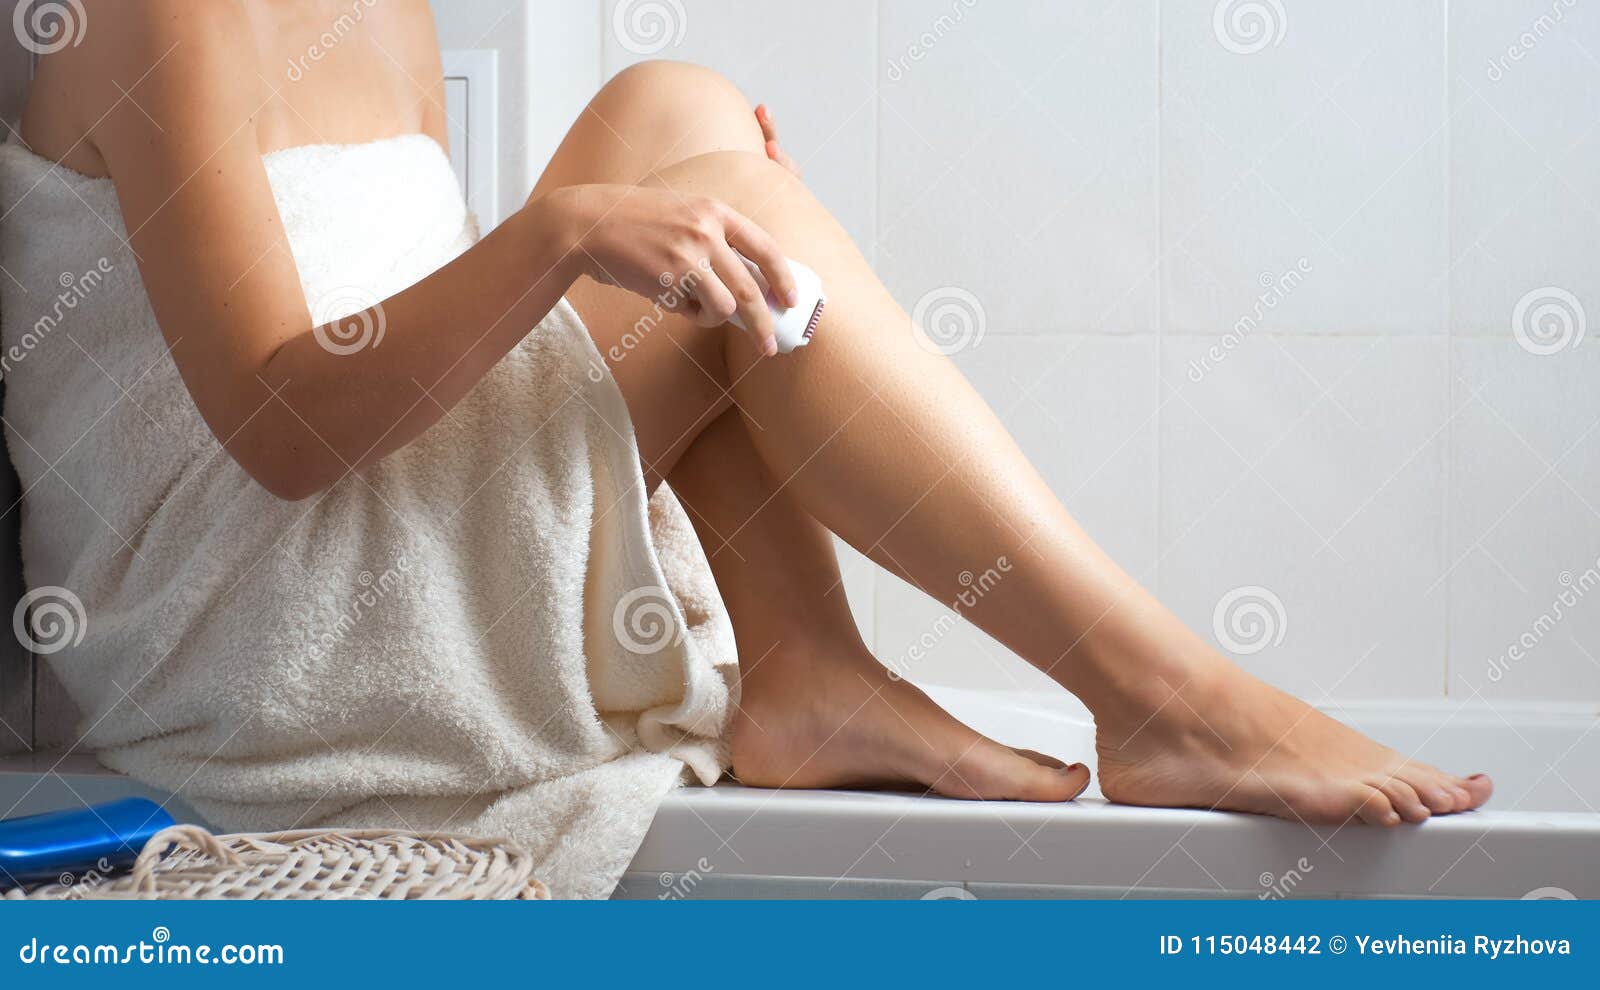 Pretty woman in bathroom stock image. Image of model 